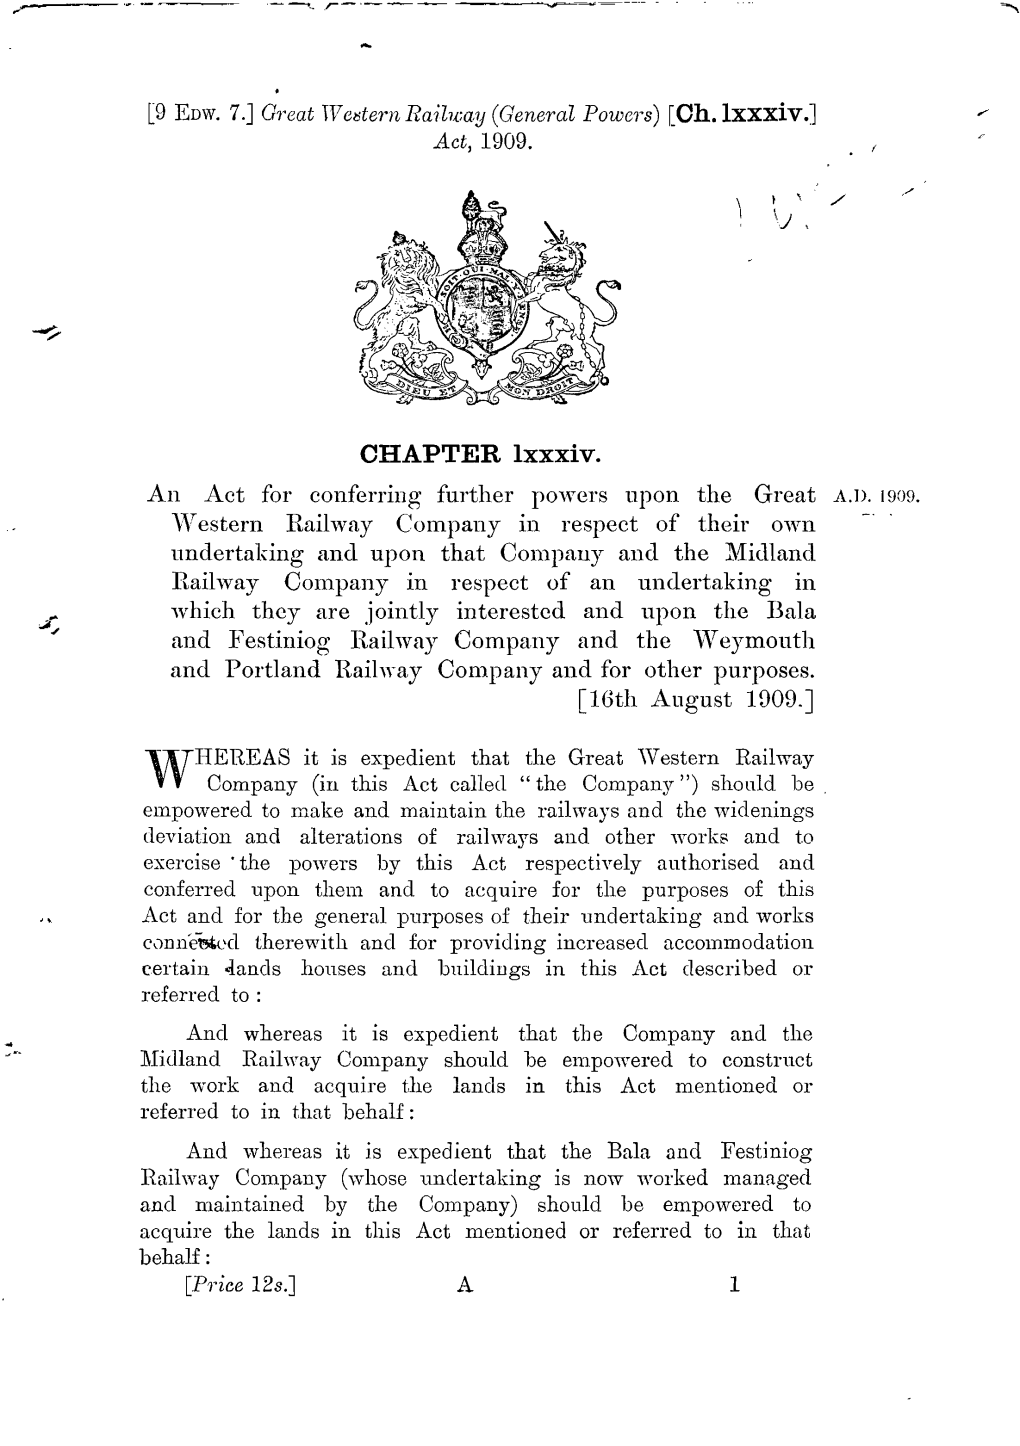 Great Western Railway (General Powers) Act 1909